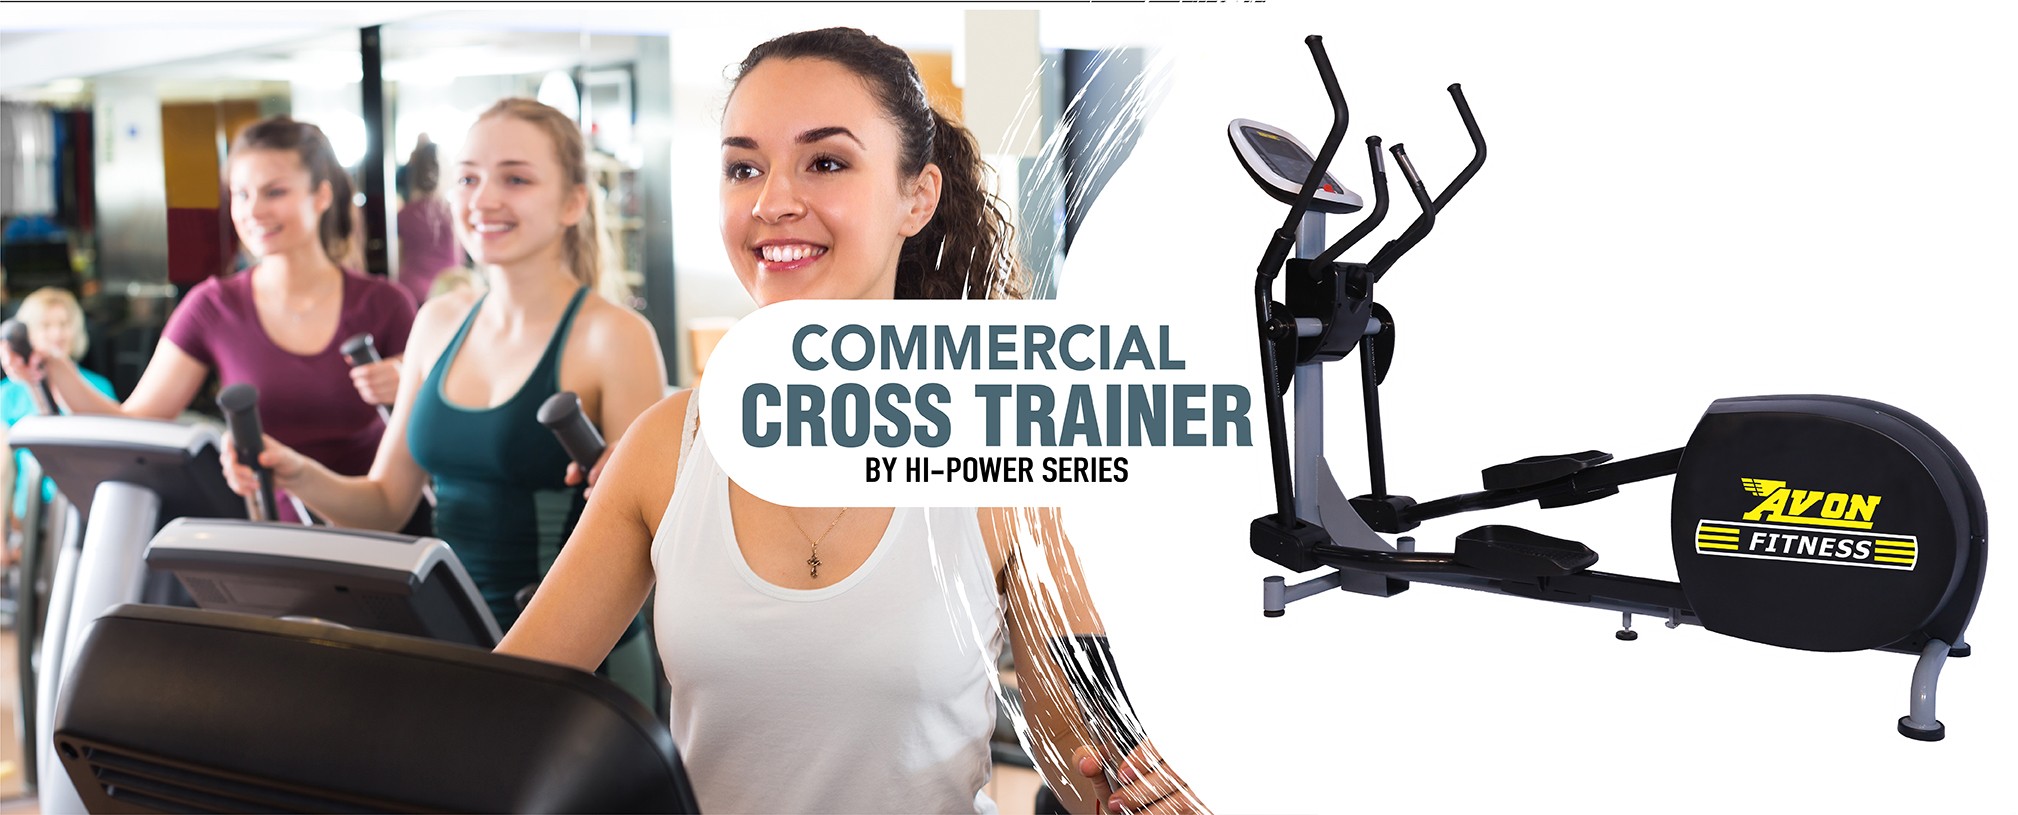 Is a treadmill superior to a cross trainer? Cross-trainerUqXDJ01-45-45